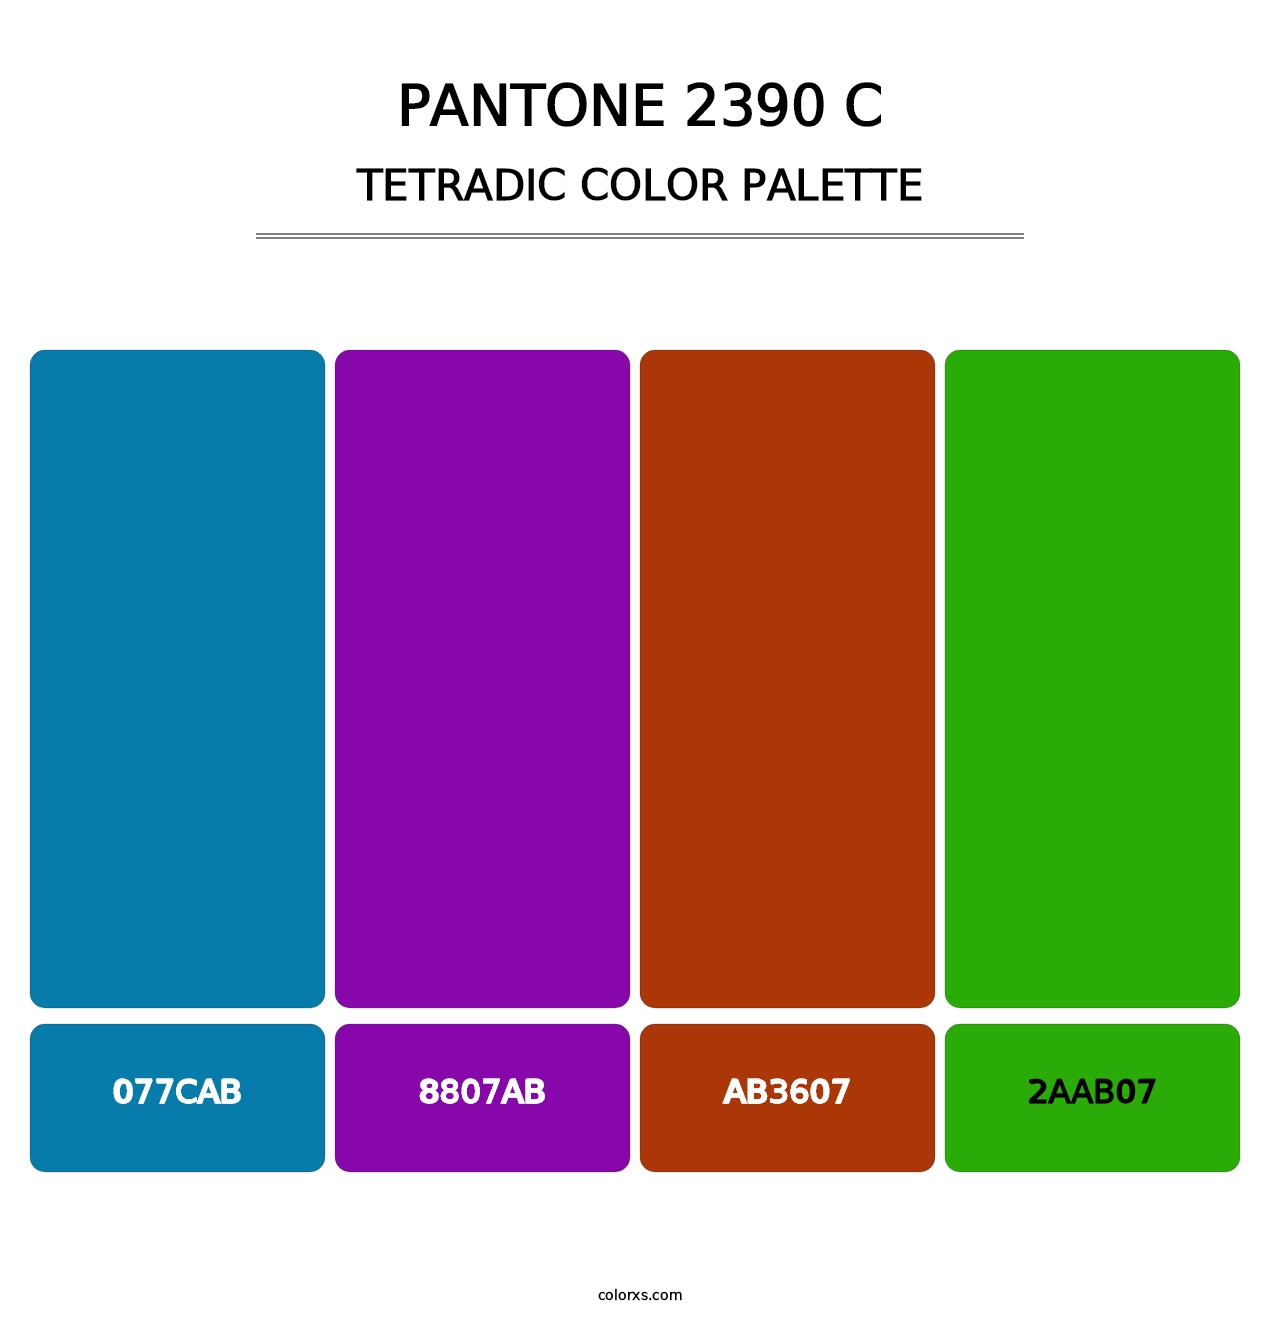 PANTONE 2390 C - Tetradic Color Palette